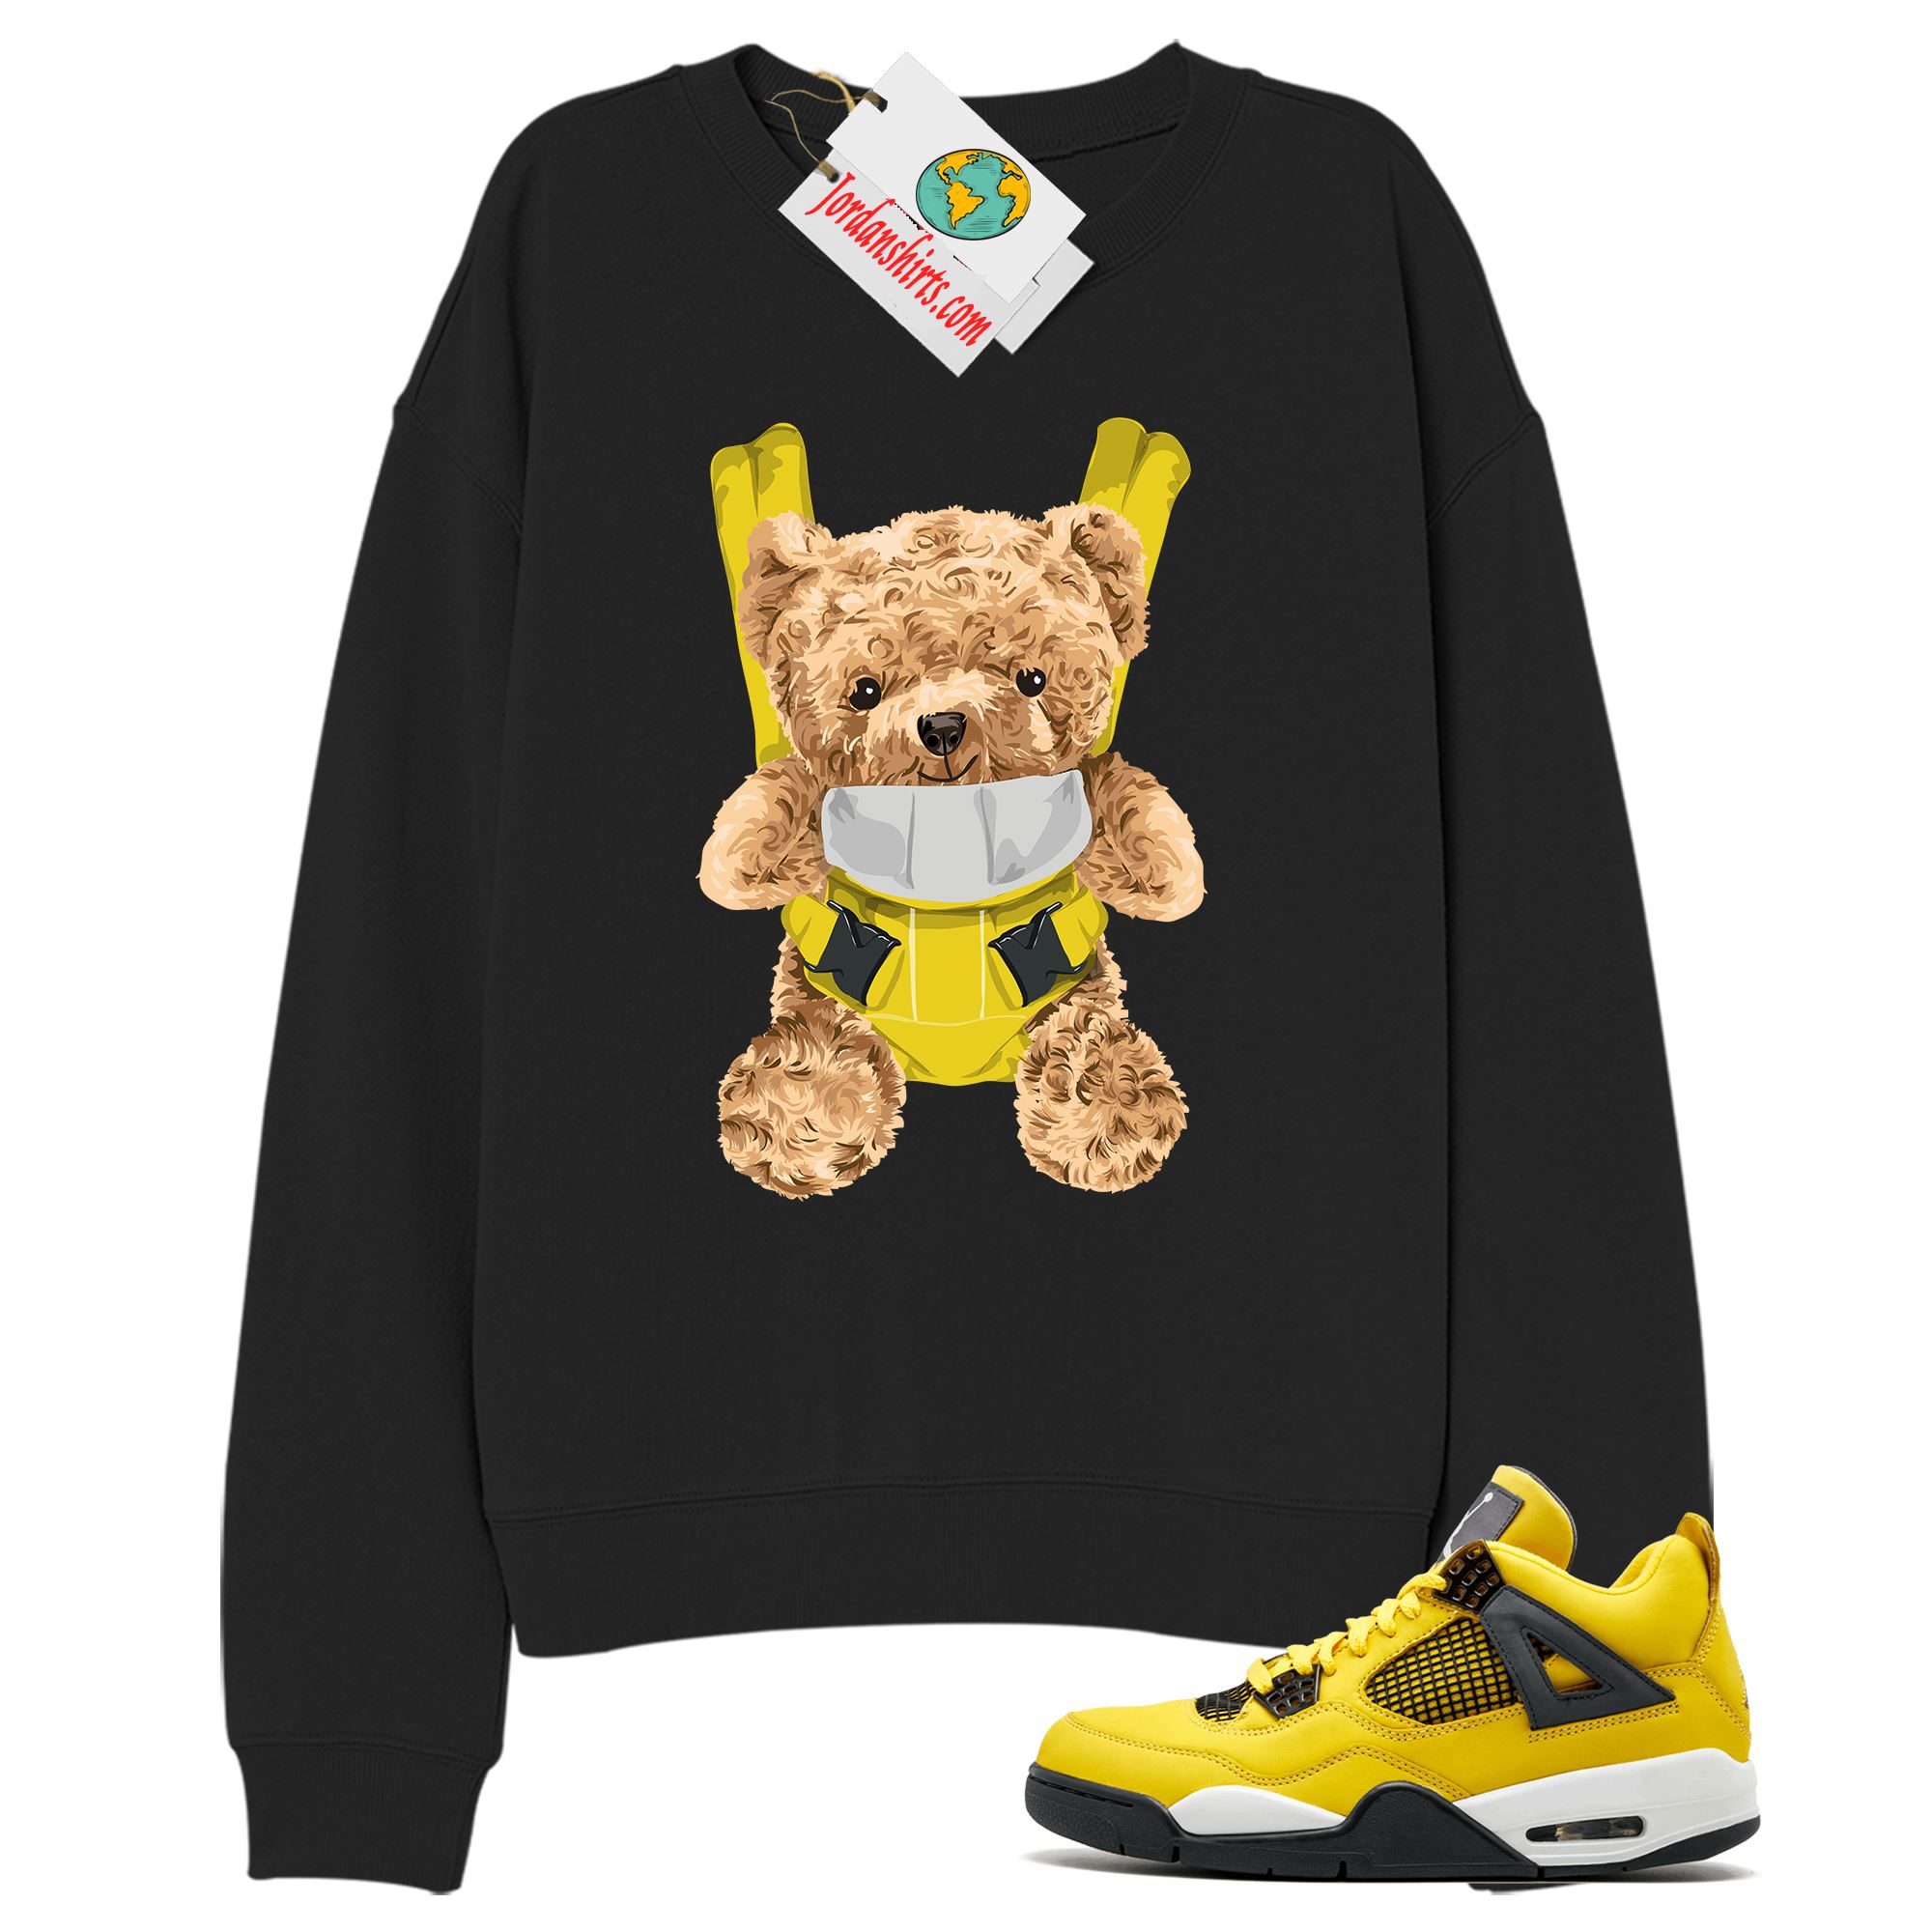 Jordan 4 Sweatshirt, Teddy Bear Bag Black Sweatshirt Air Jordan 4 Tour Yellow Lightning 4s Full Size Up To 5xl